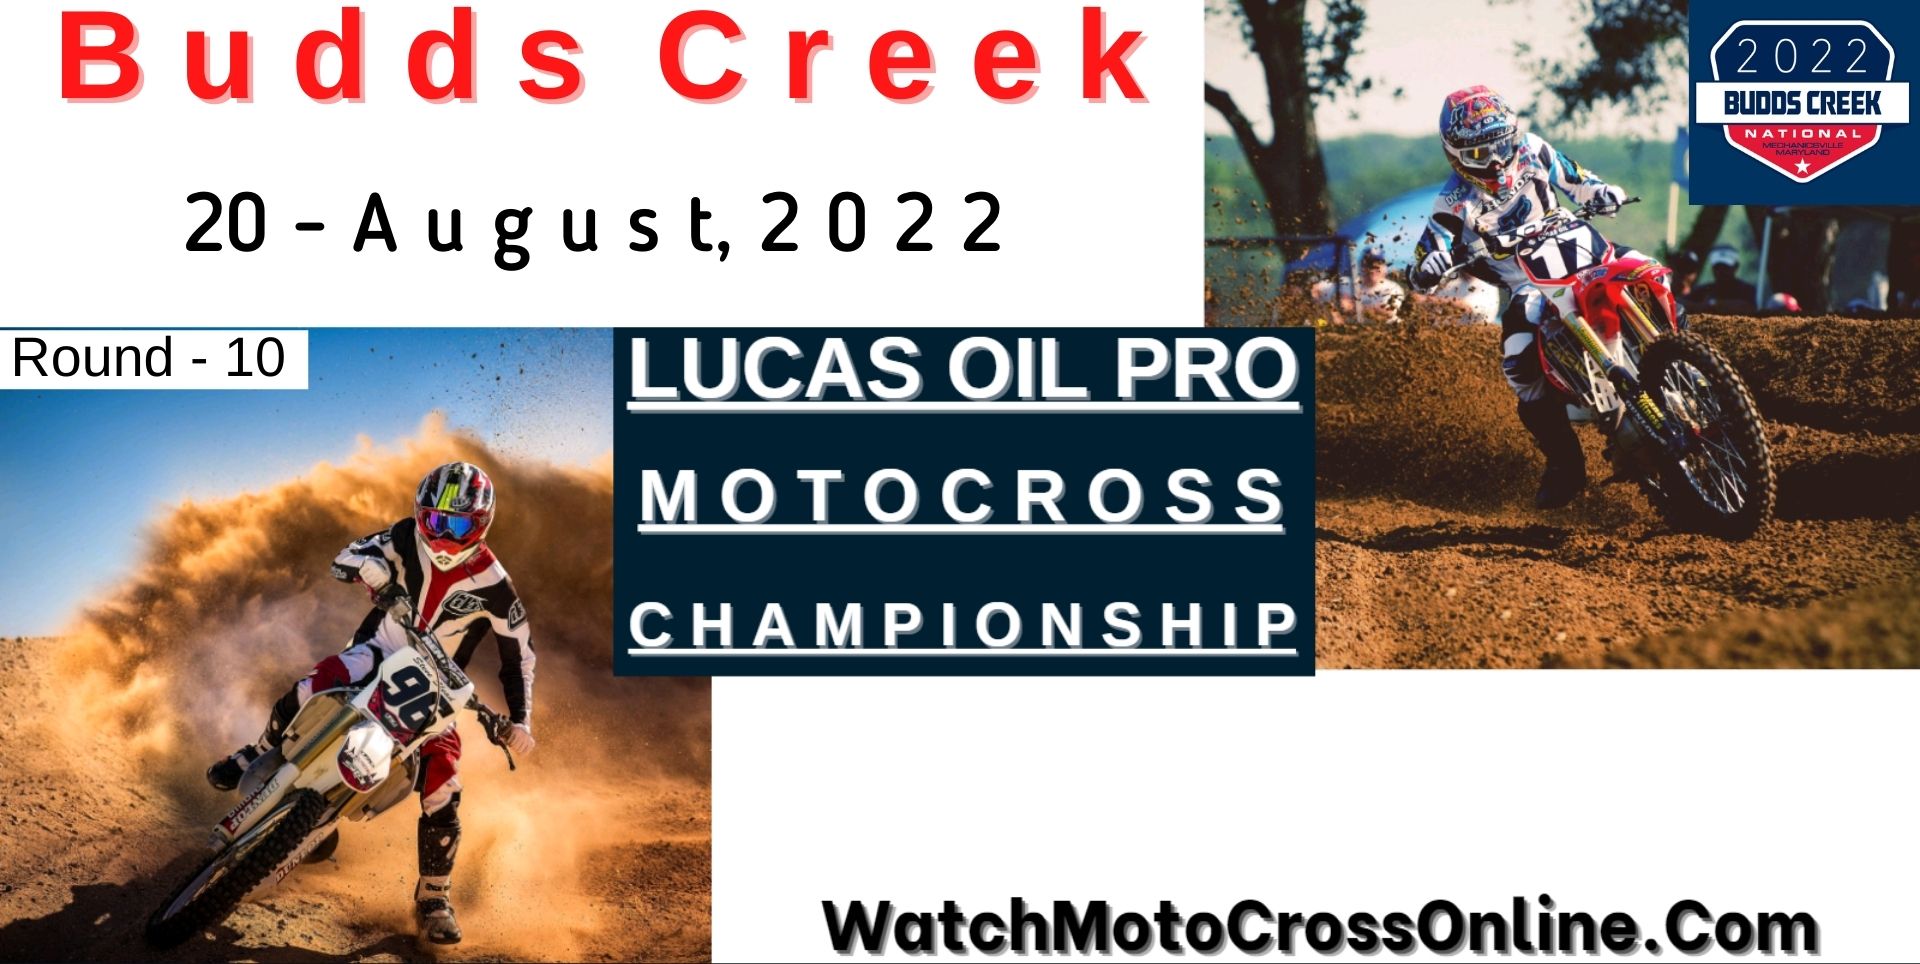 Budds Creek Motocross Live Stream 2022